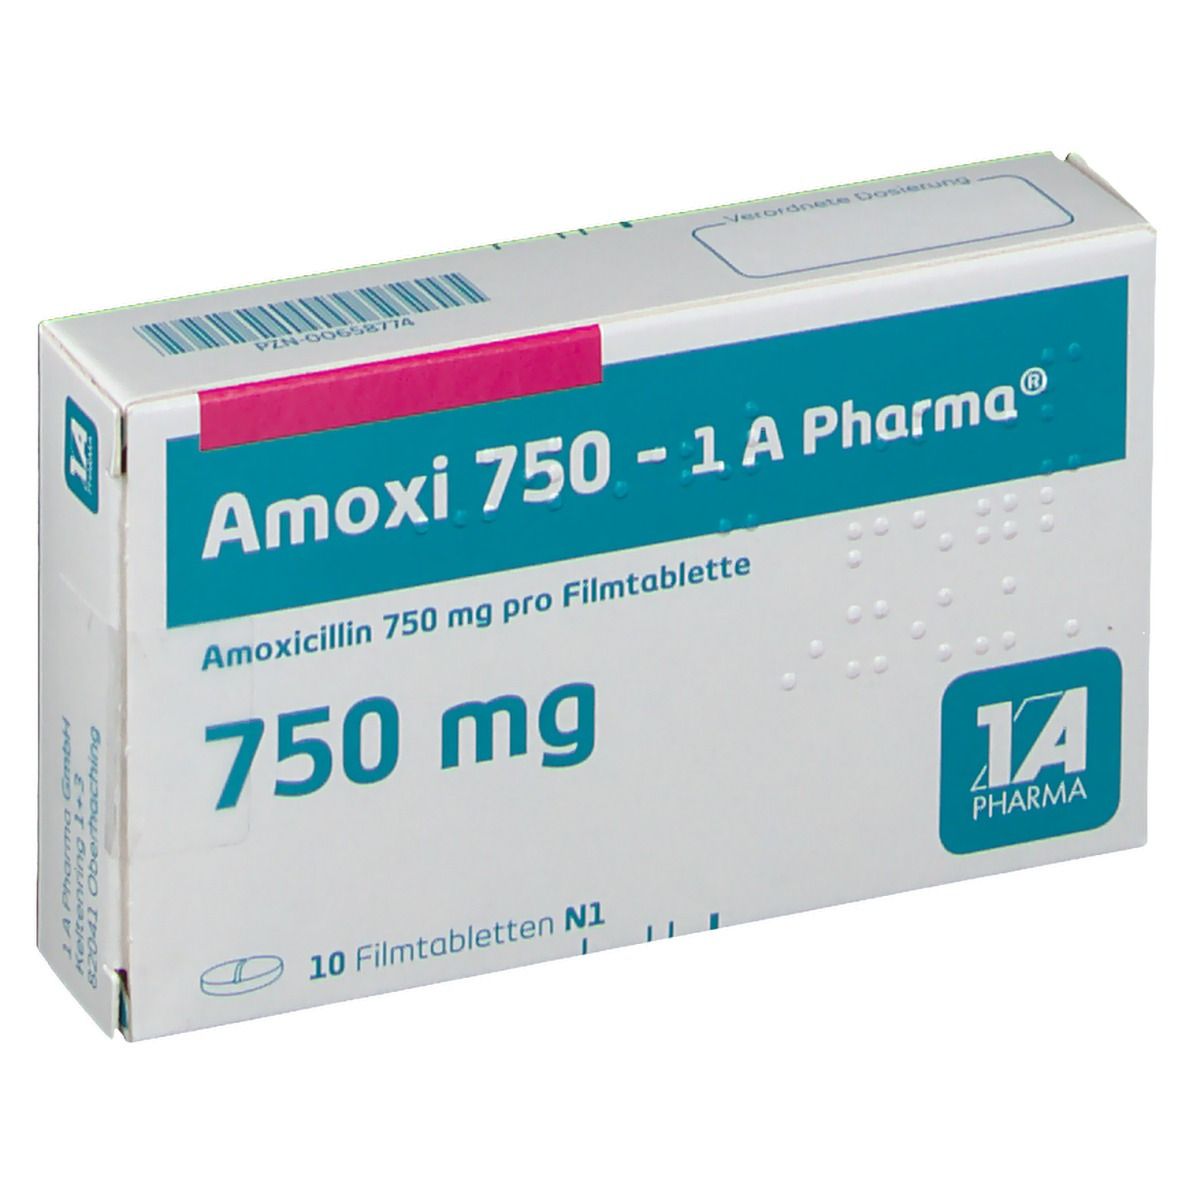 Amoxi 750 1A Pharma®